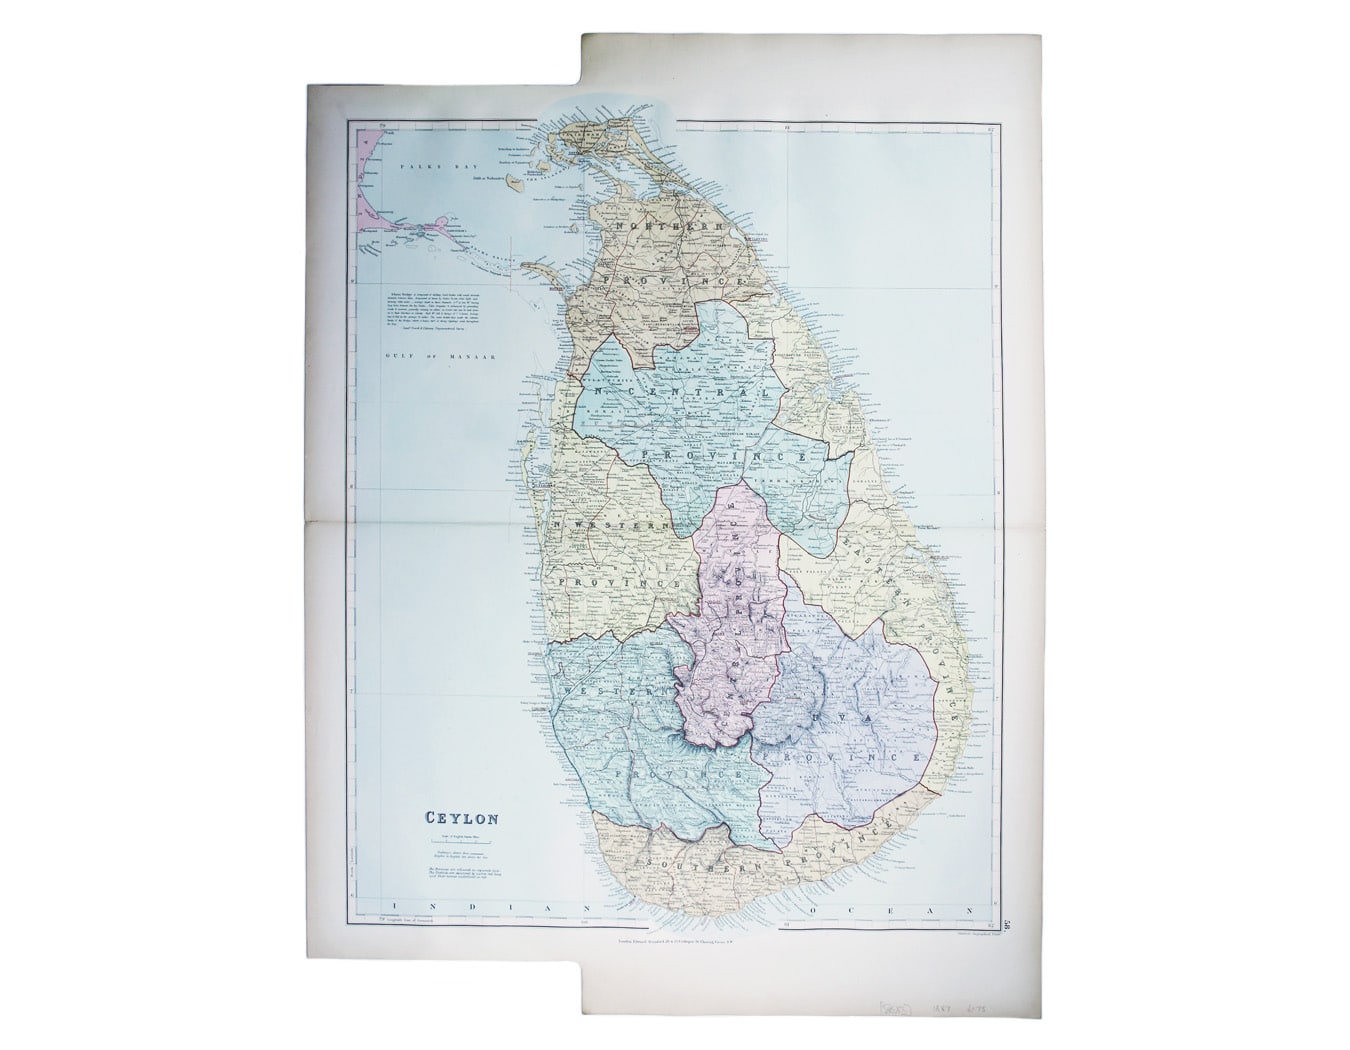 Stanford’s Map of Sri Lanka